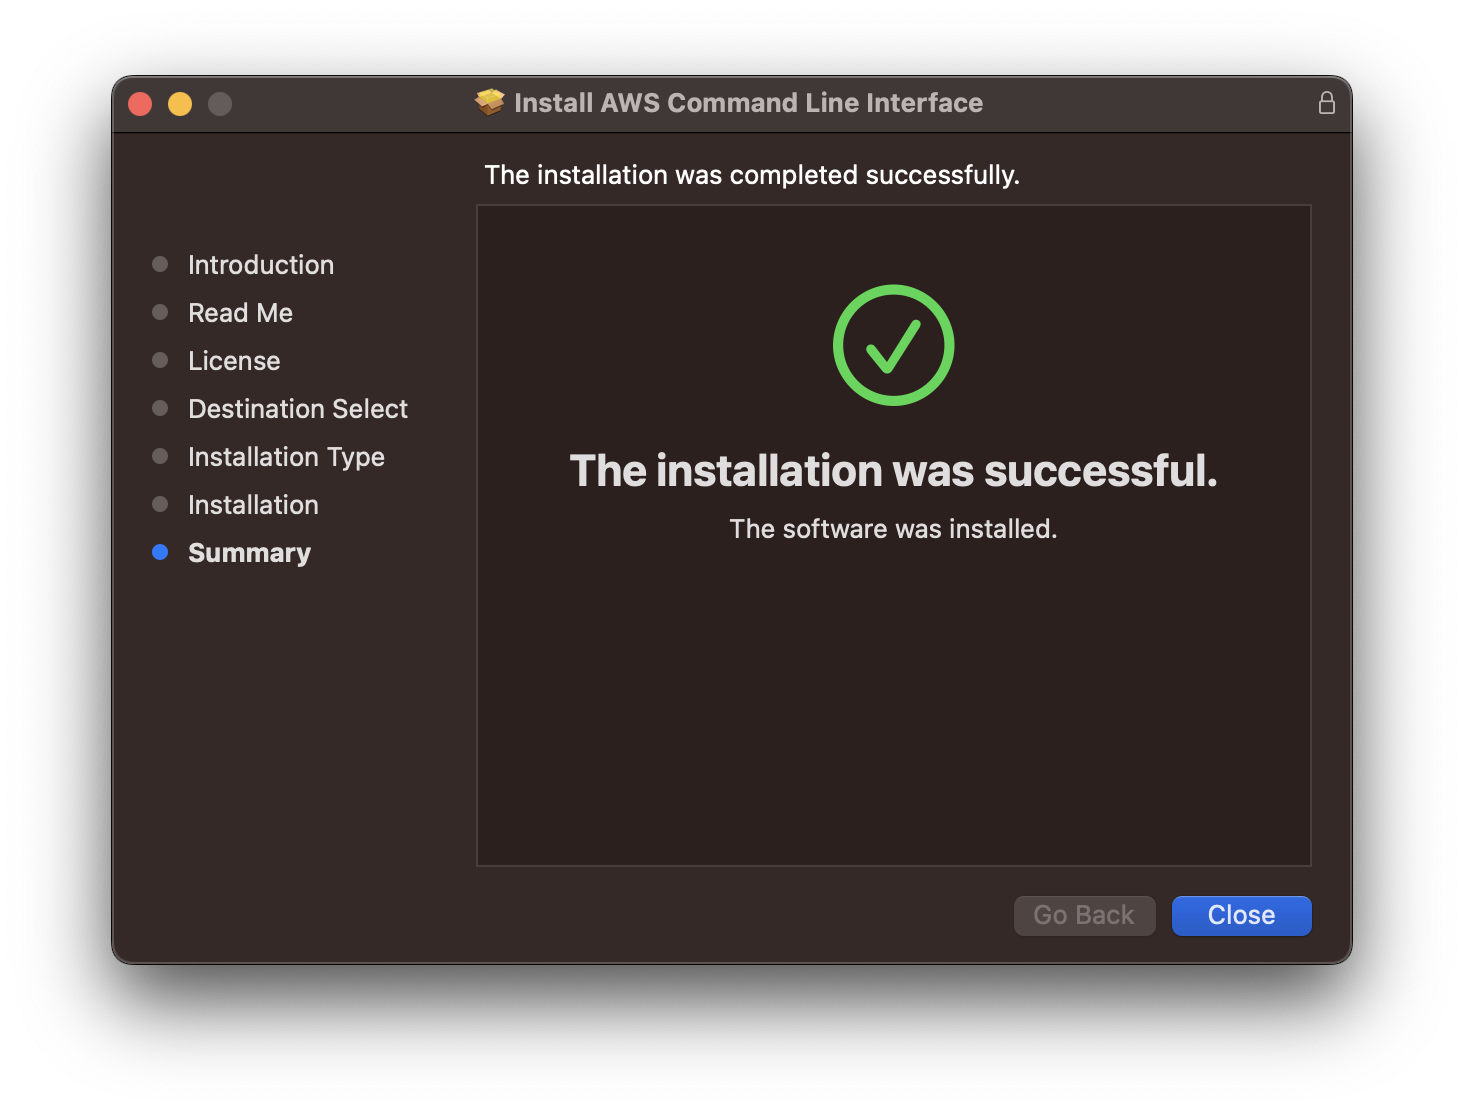 6 - AWS CLI installation was successful Screen